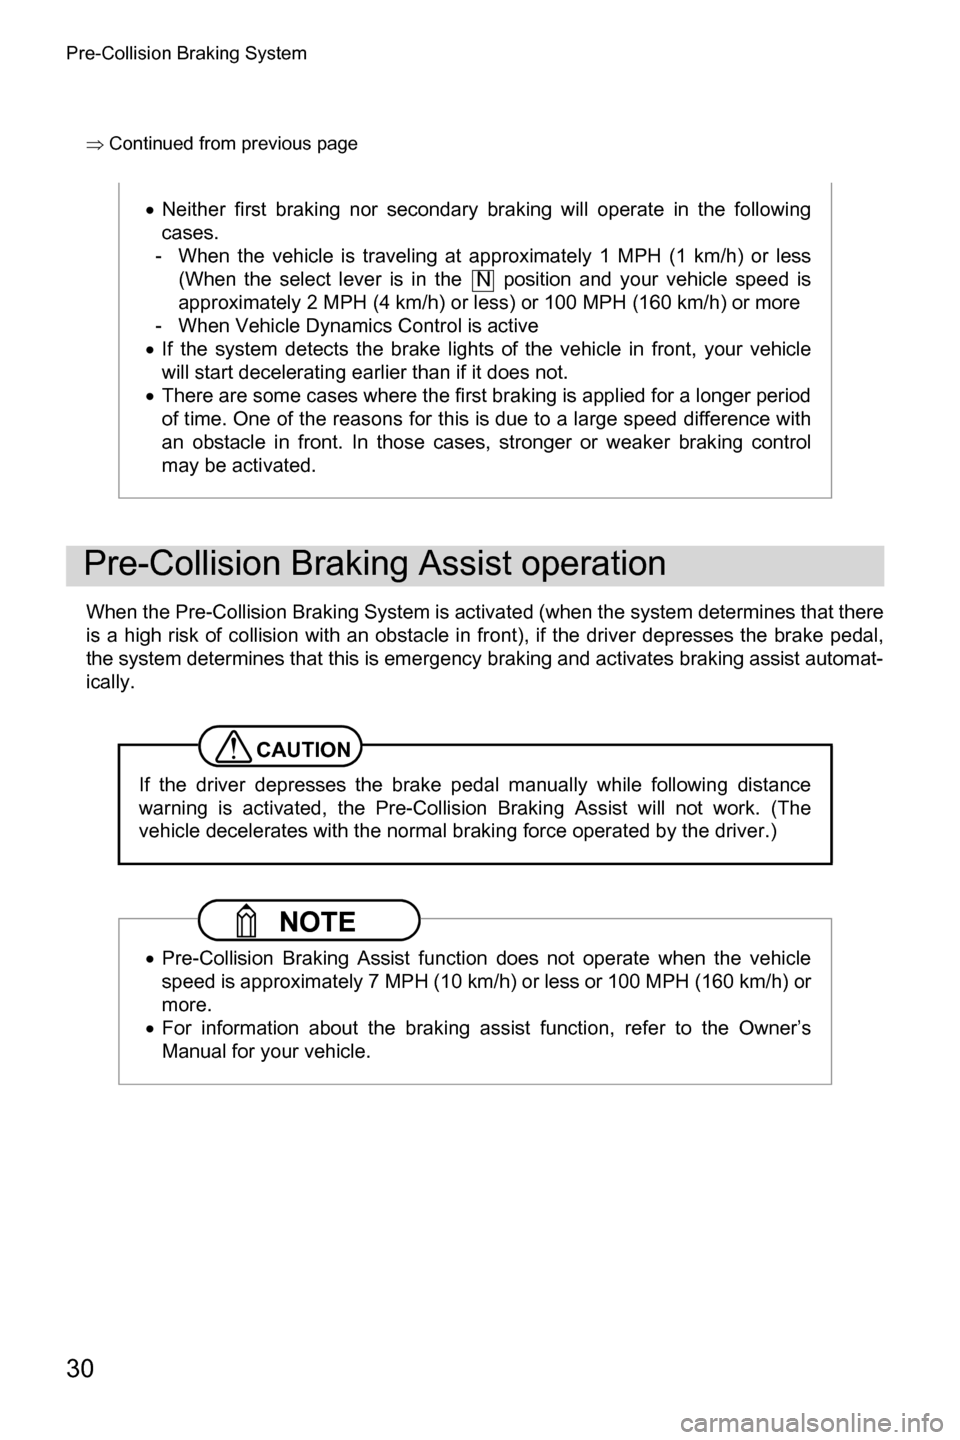 SUBARU CROSSTREK 2017 1.G Driving Assist Manual Pre-Collision Braking System
30
�Ÿ�Continued from previous page
When the Pre-Collision Braking System is activated (when the system determines that there
is a high risk of collision with an obstacle